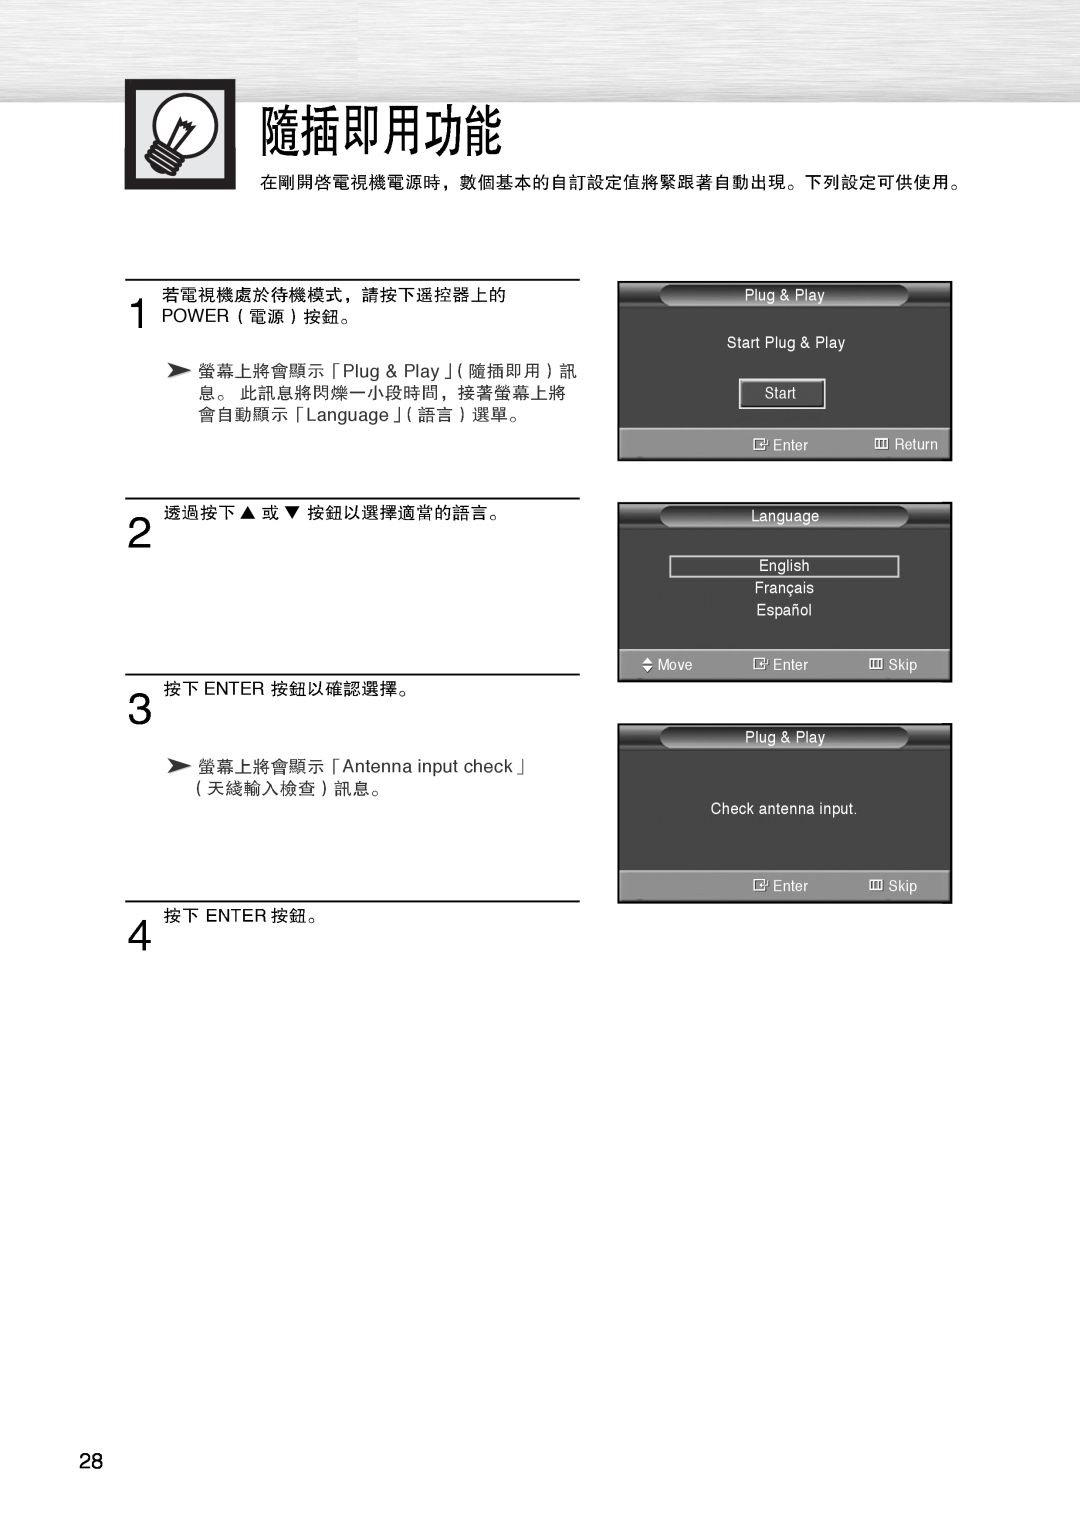 Samsung PL-42D4S manual Power, Plug & Play Language, Enter, Antenna input check 